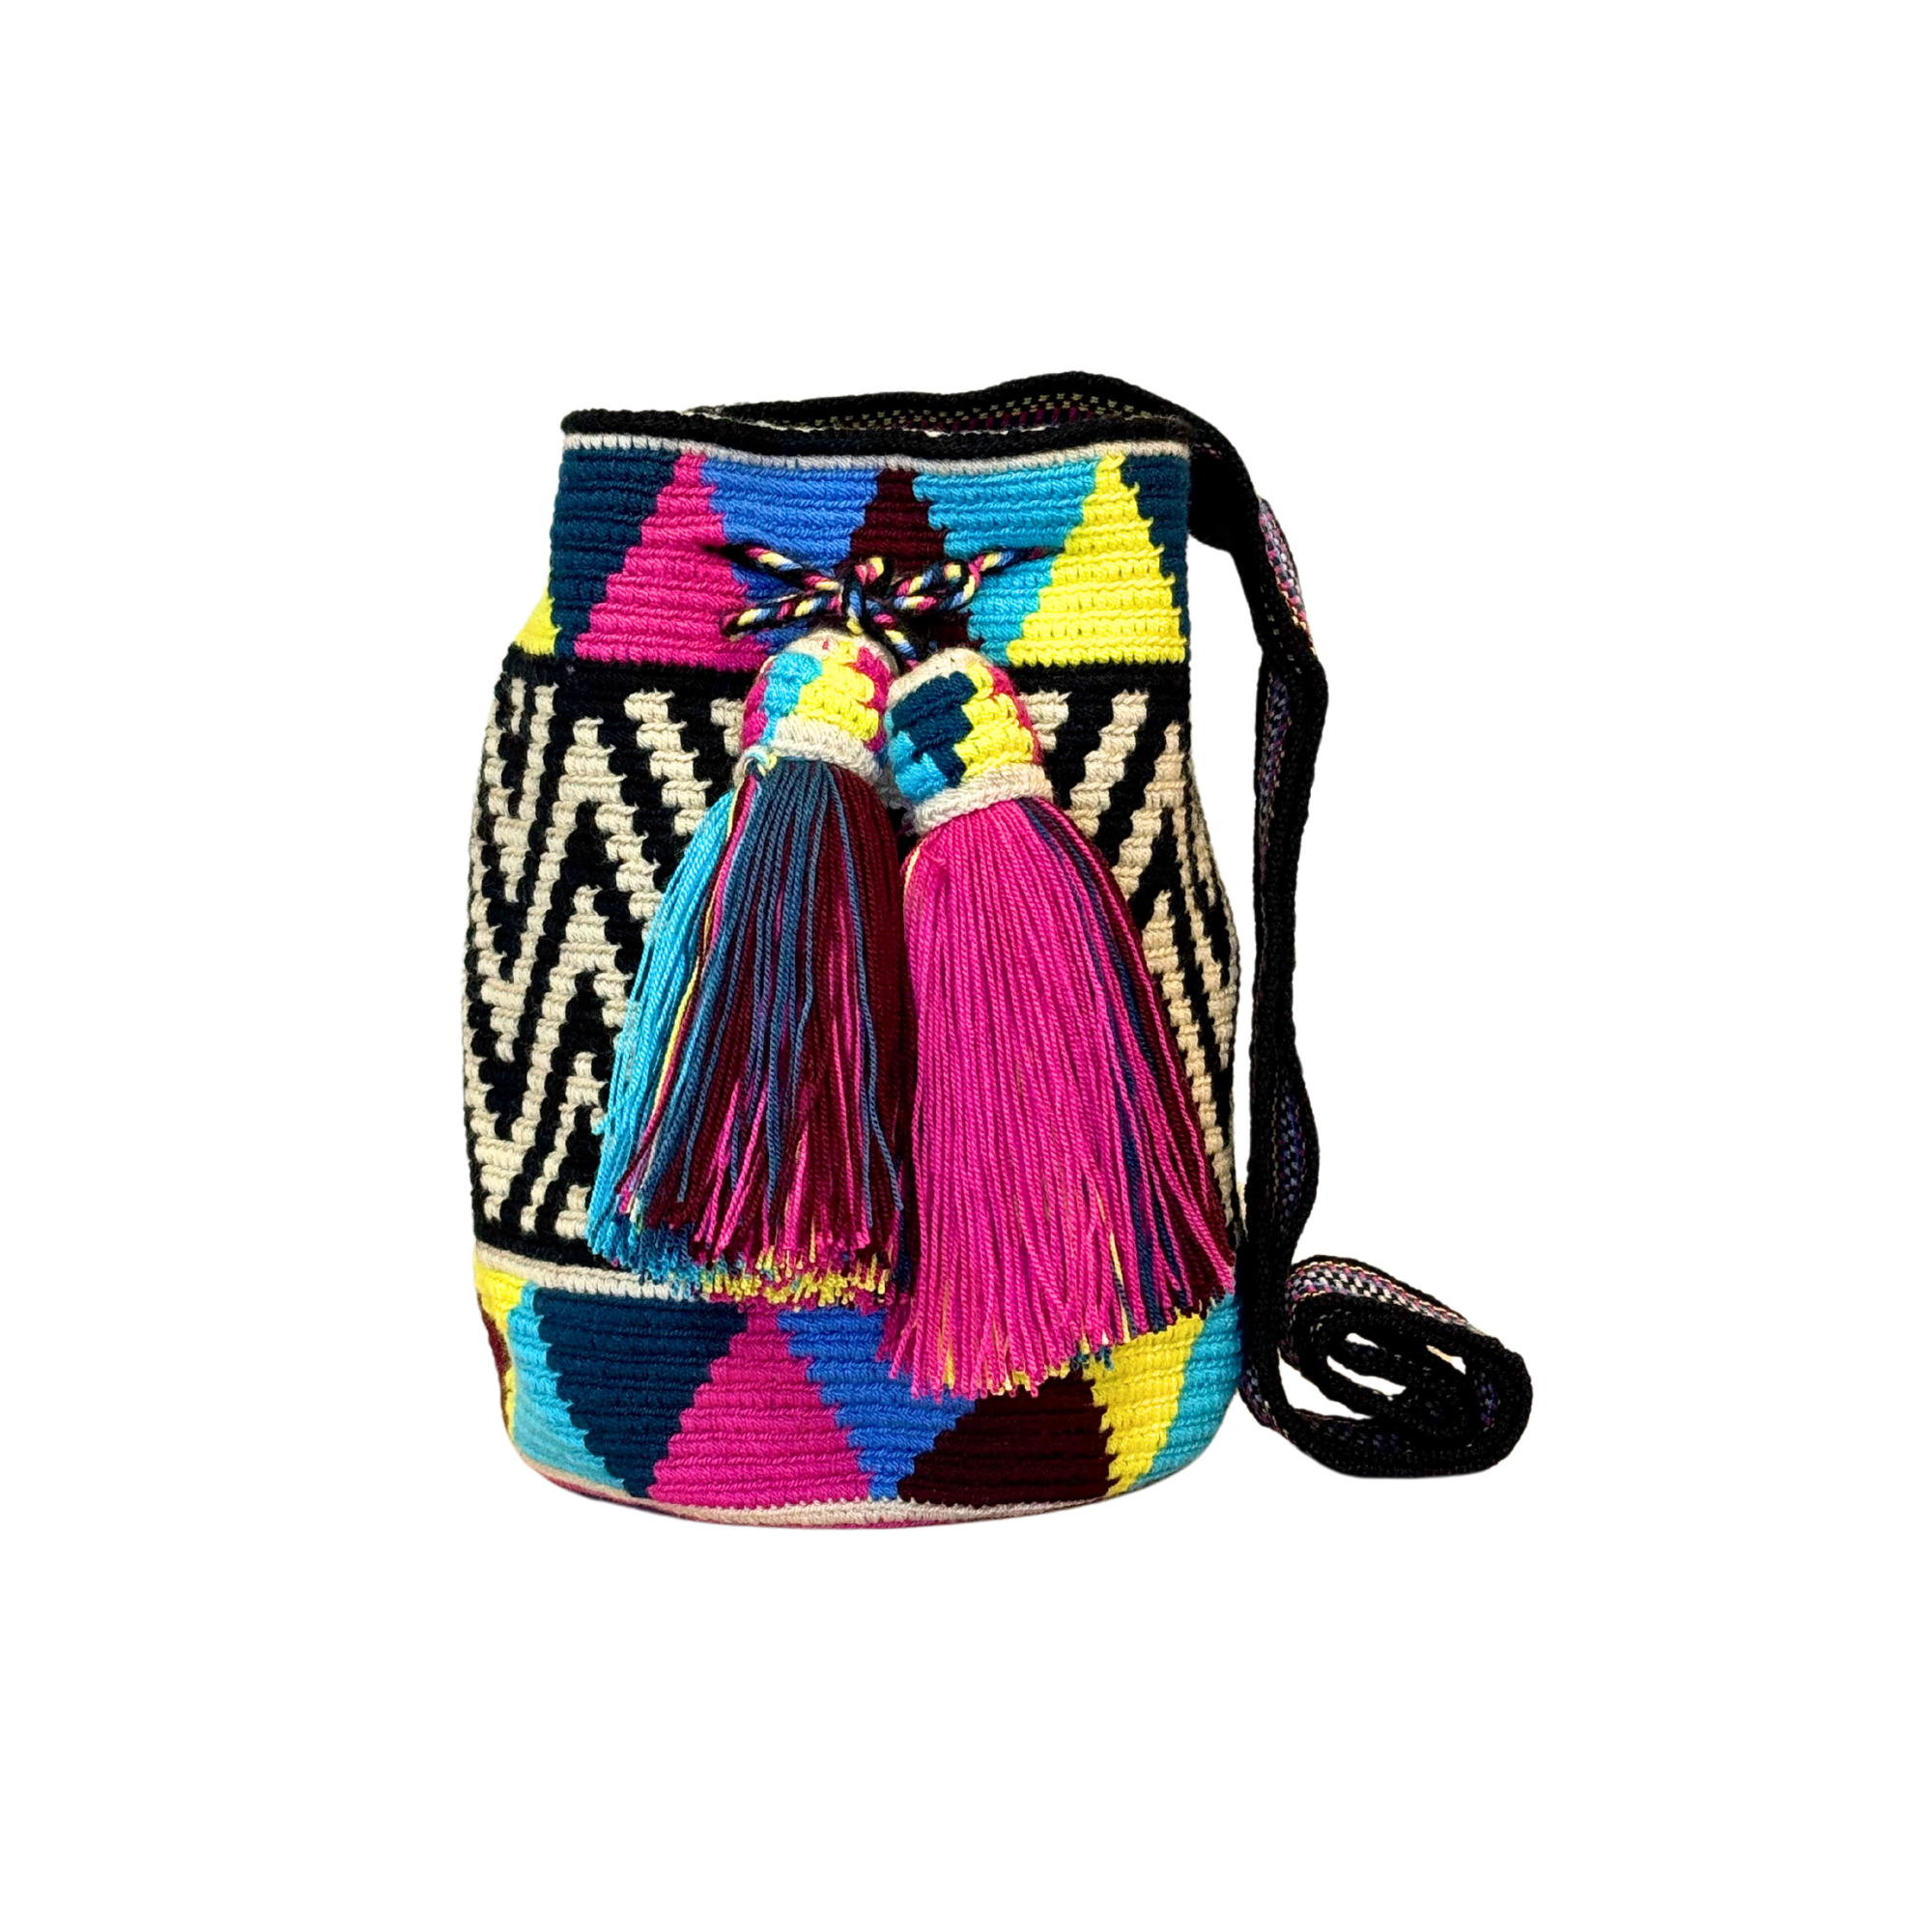 Exclusive Wayuu mochila bag | Medium Woven Crossbody Handmade Gorrito Mochila | Zig zag blue and yellow solid strap